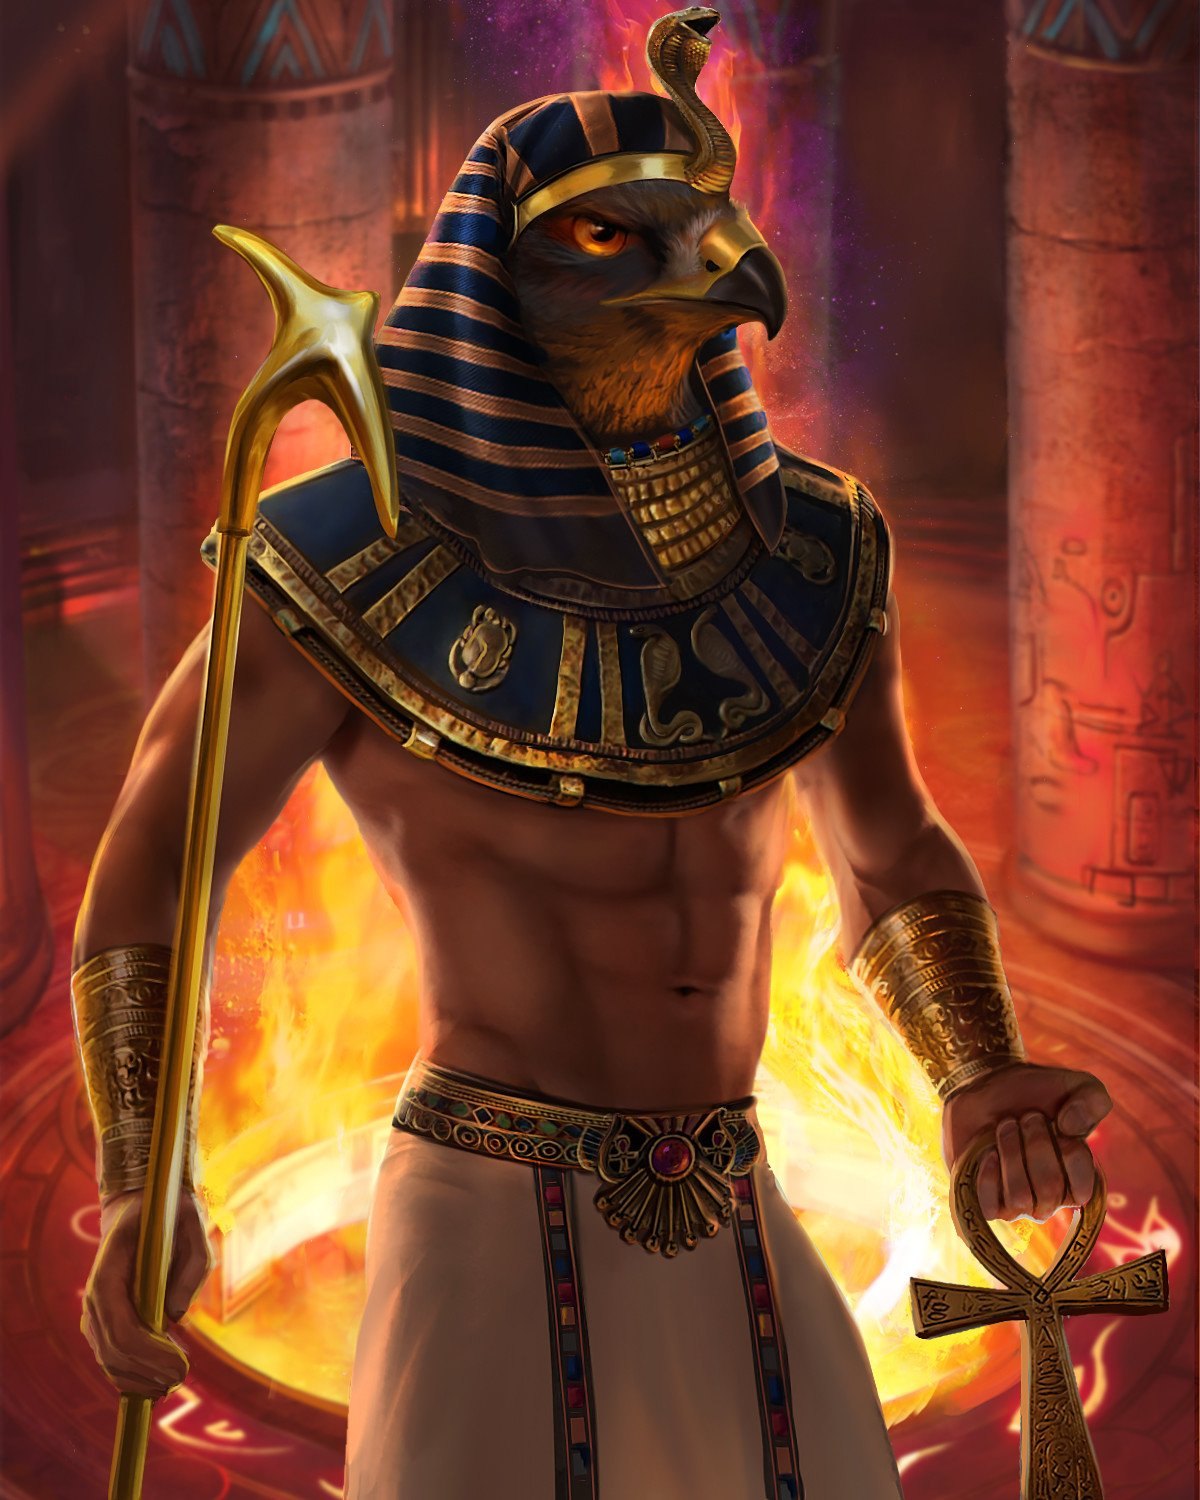 Бог египта амон